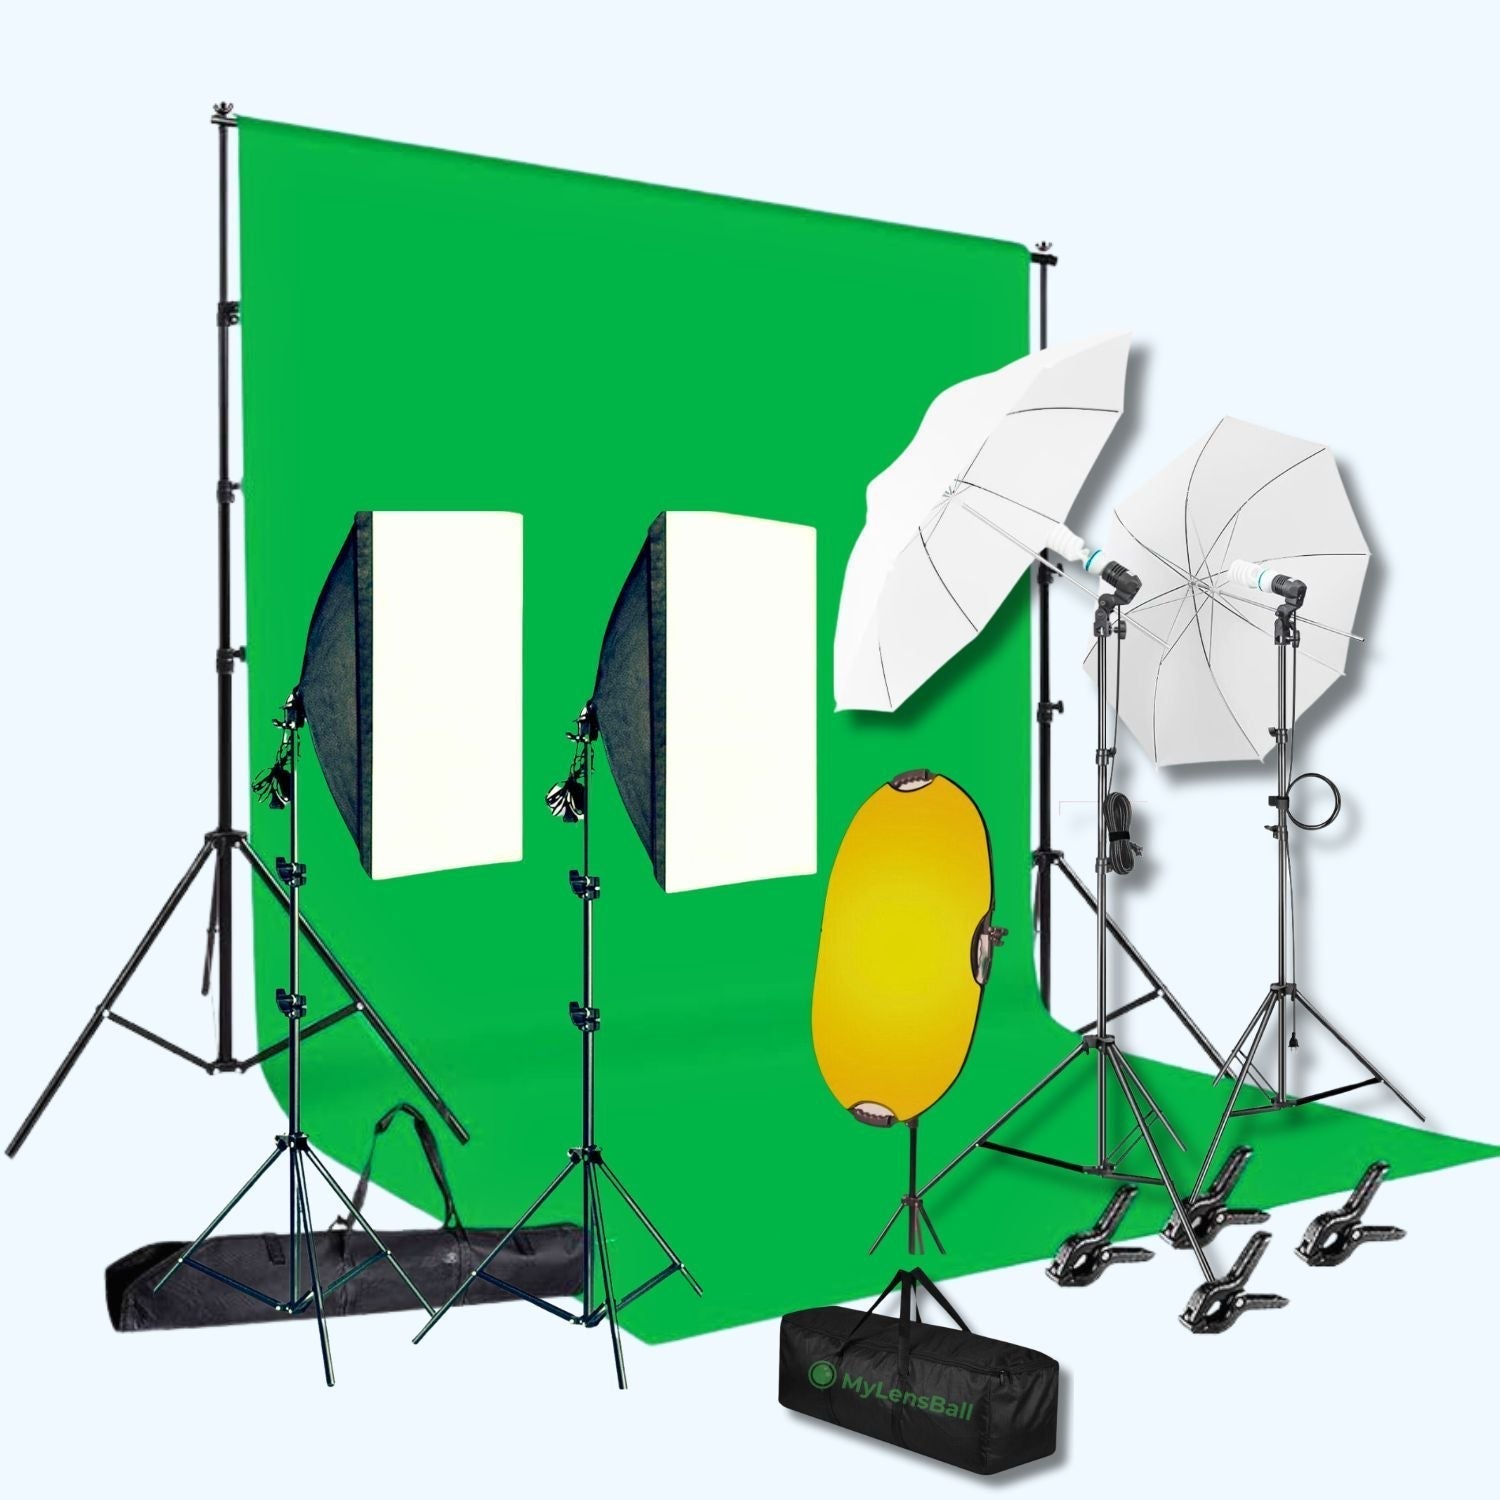 Introducing ProFlex Studio Lighting by MyLensBall: Elevate Your Photography & Videography - mylensball.com.au